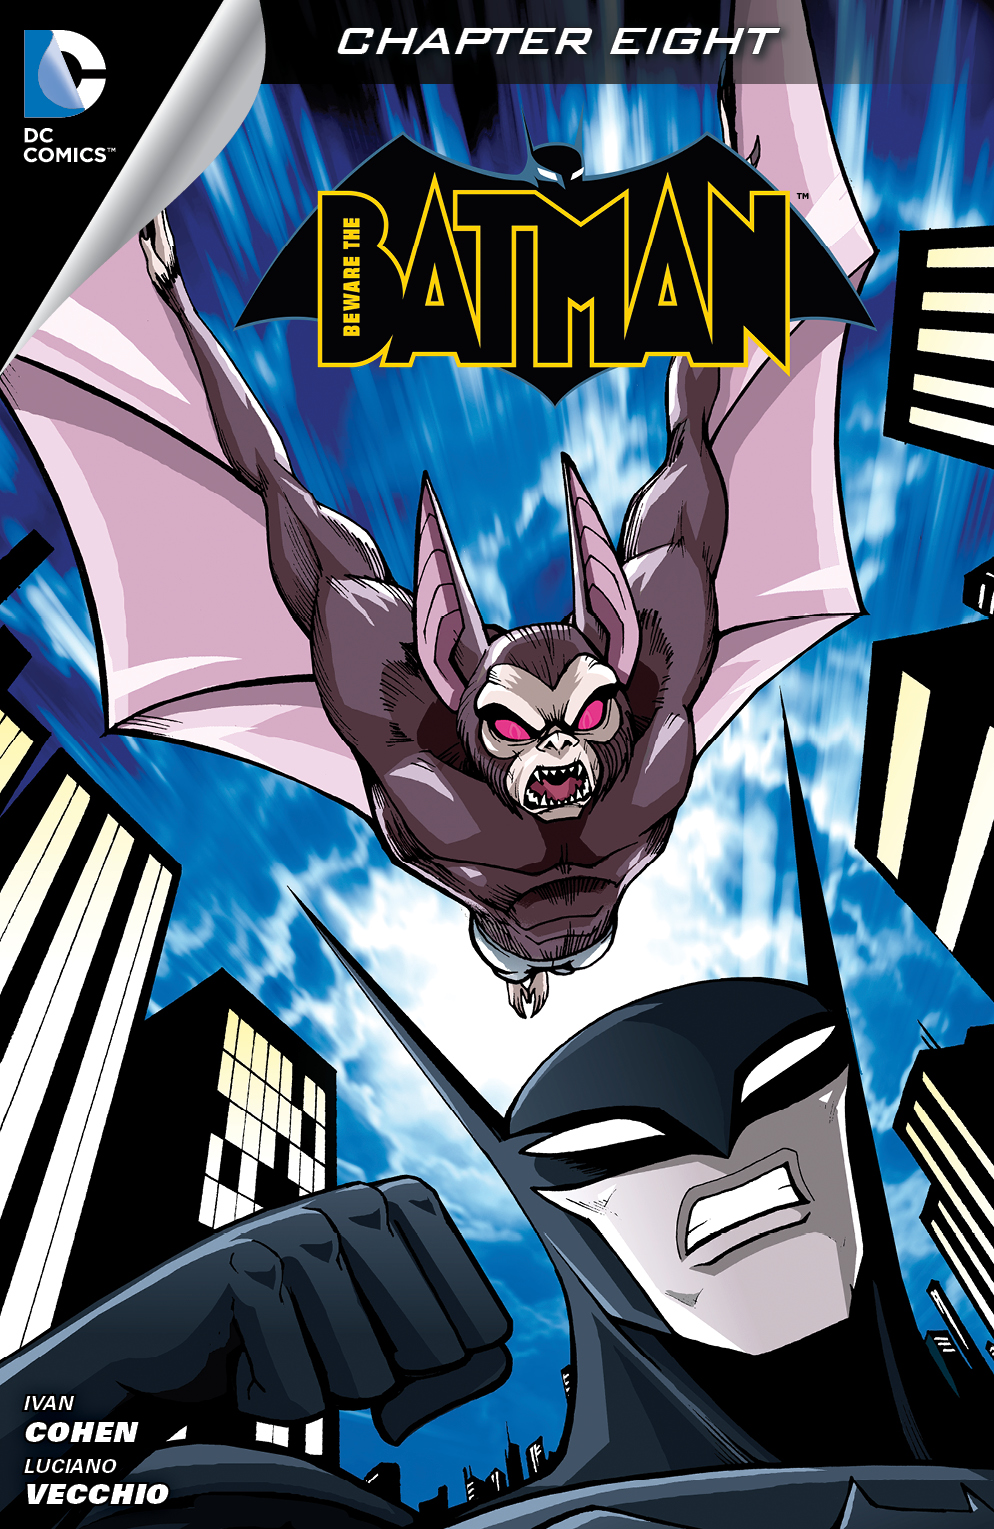 Beware The Batman #8 preview images